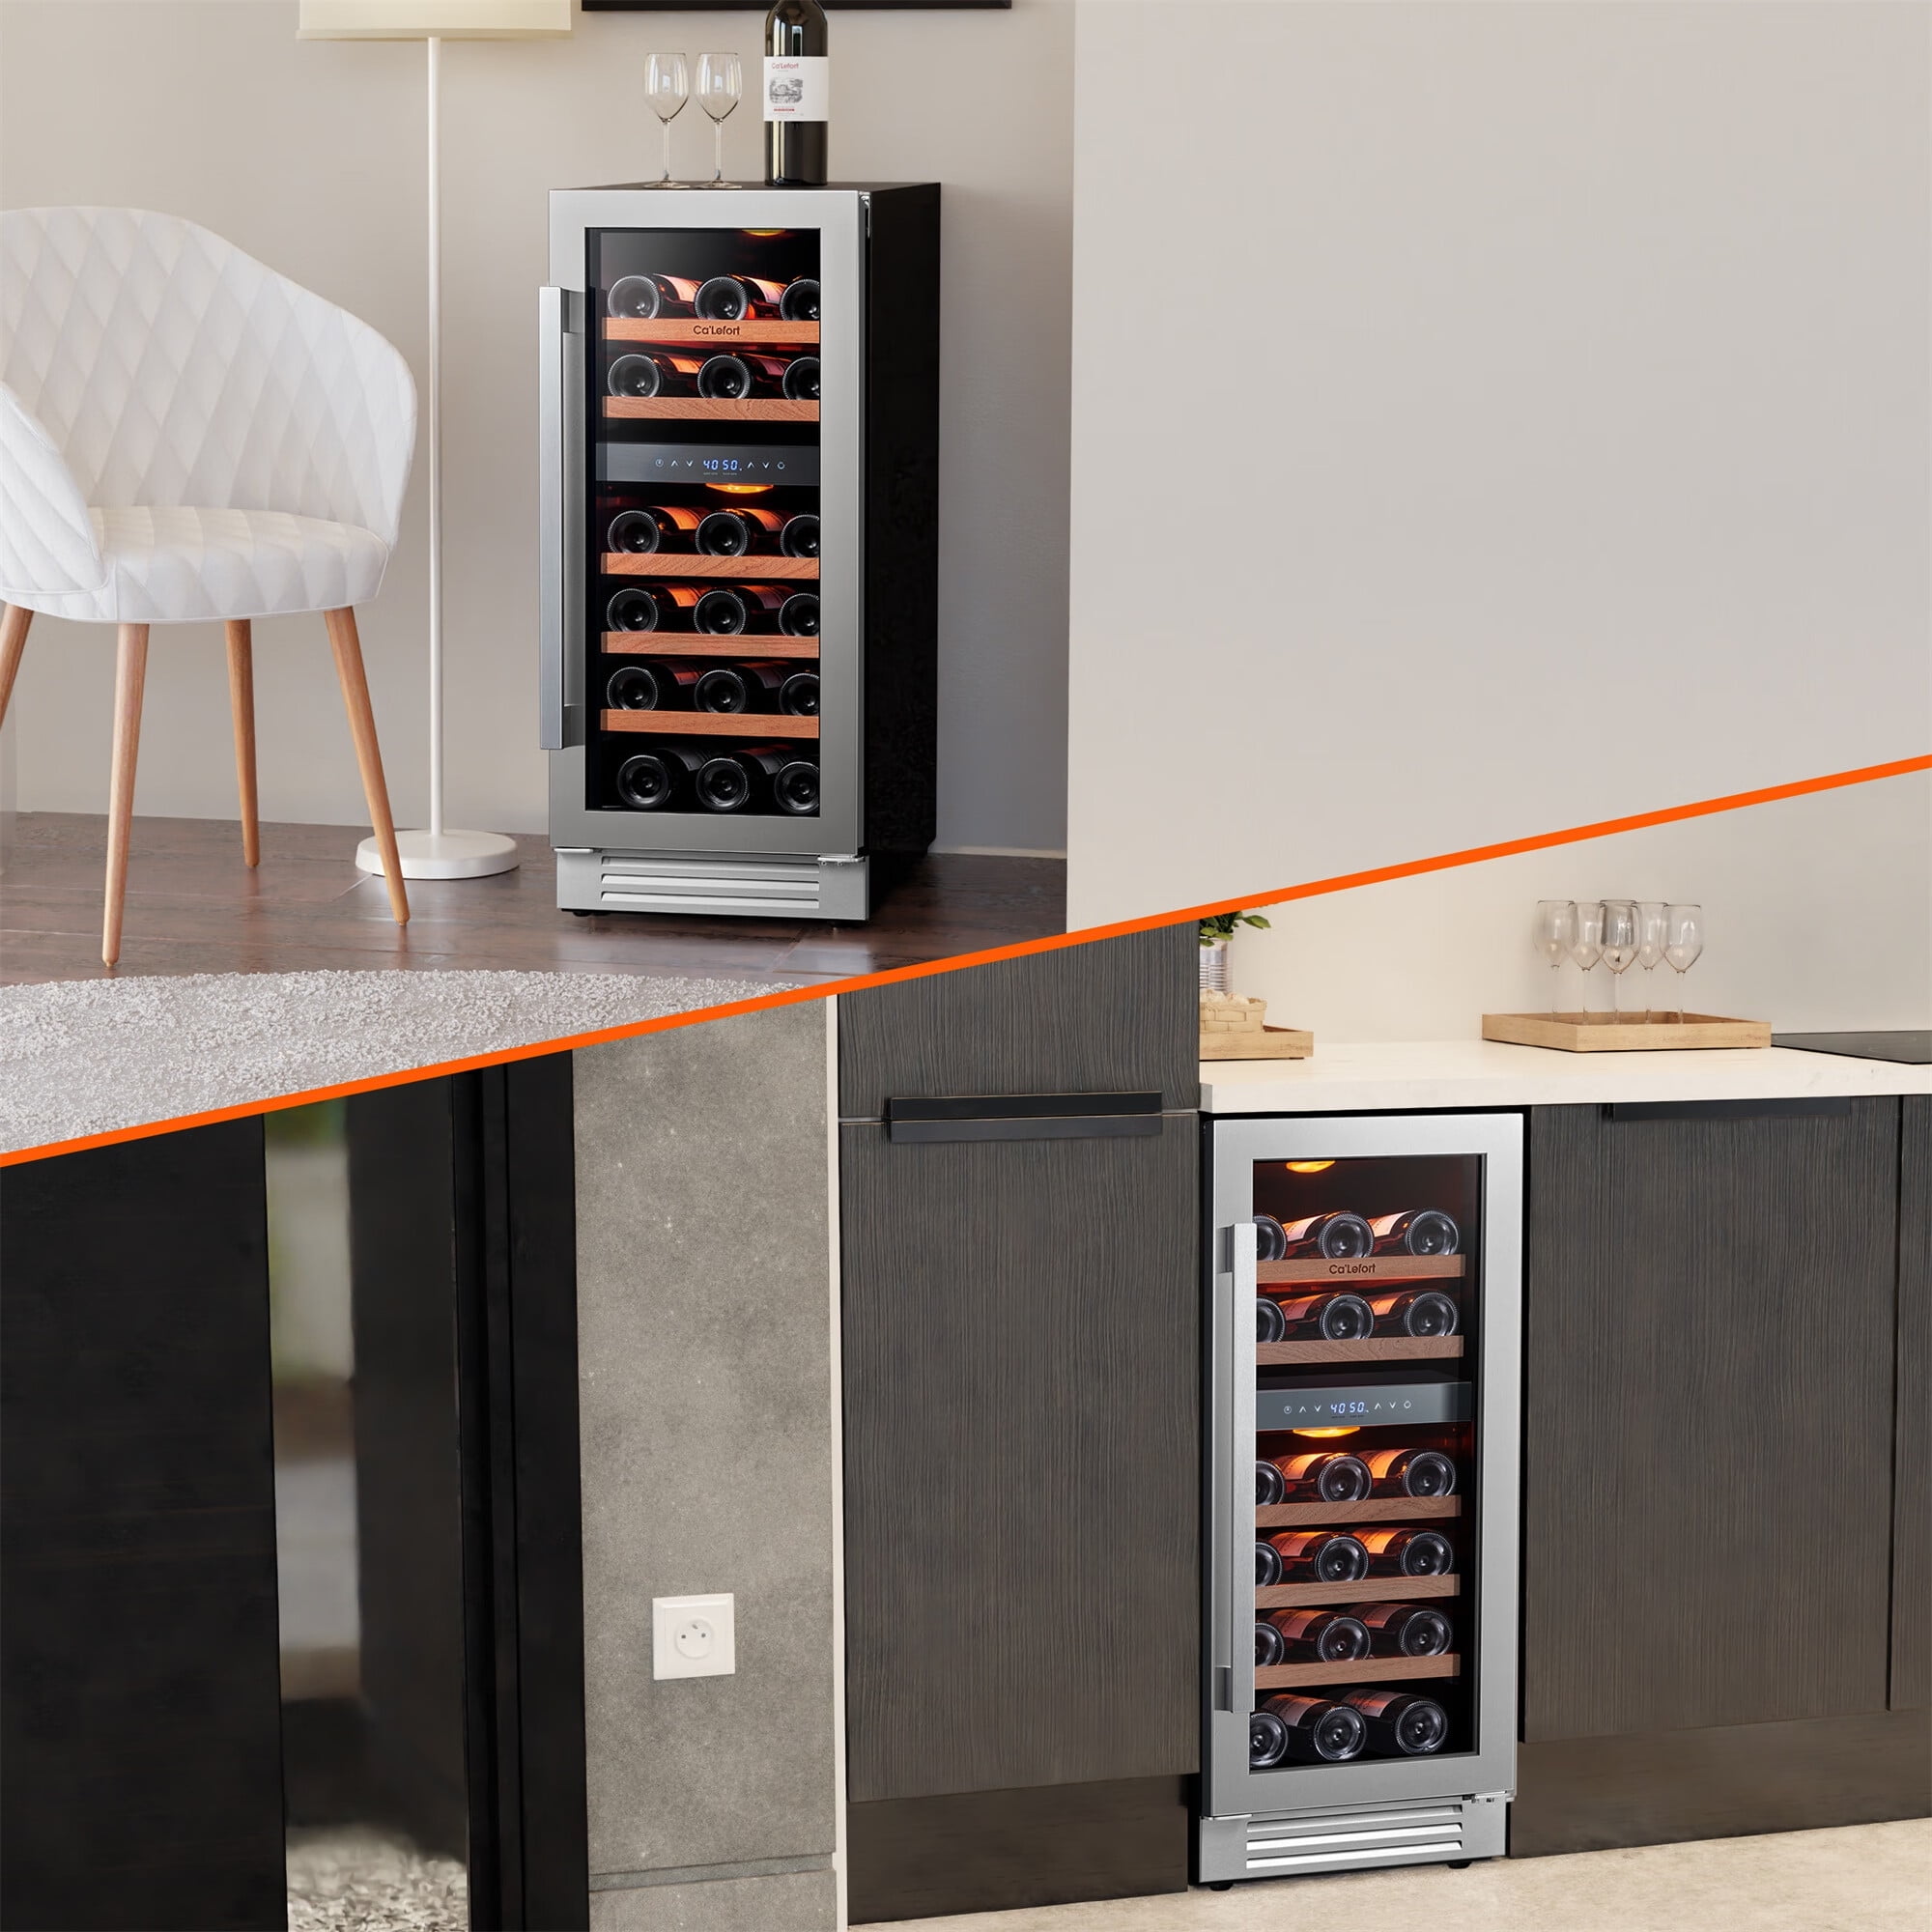 Ca'Lefort 15 Inch Wine Cooler Refrigerator, 28 Bottle Dual Zone Wine fridge with Stainless Steel Tempered Glass Door